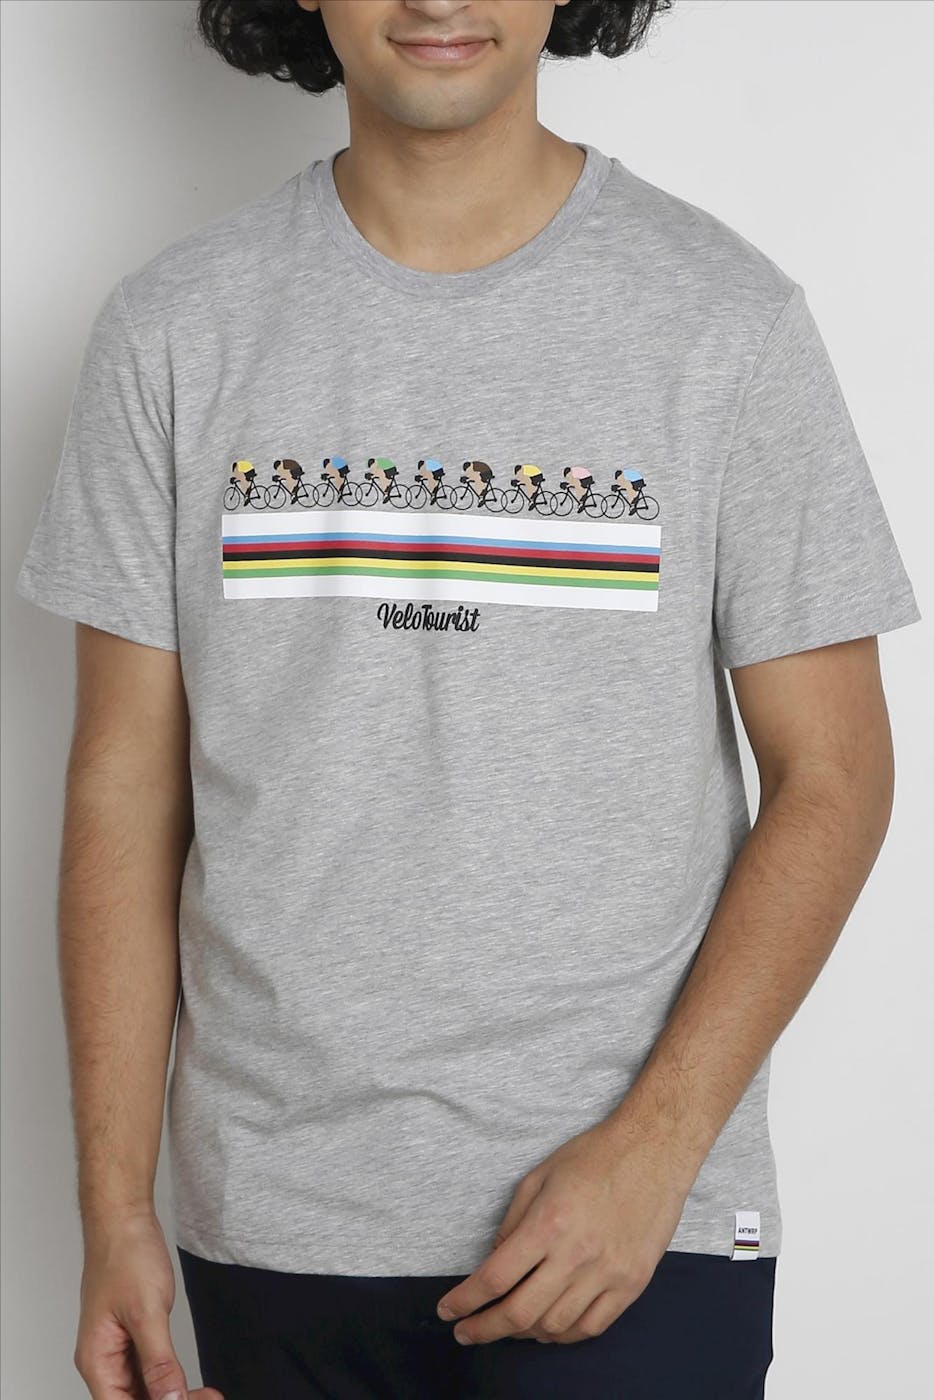 Antwrp - Lichtgrijze UCI Velo Tourist T-shirt